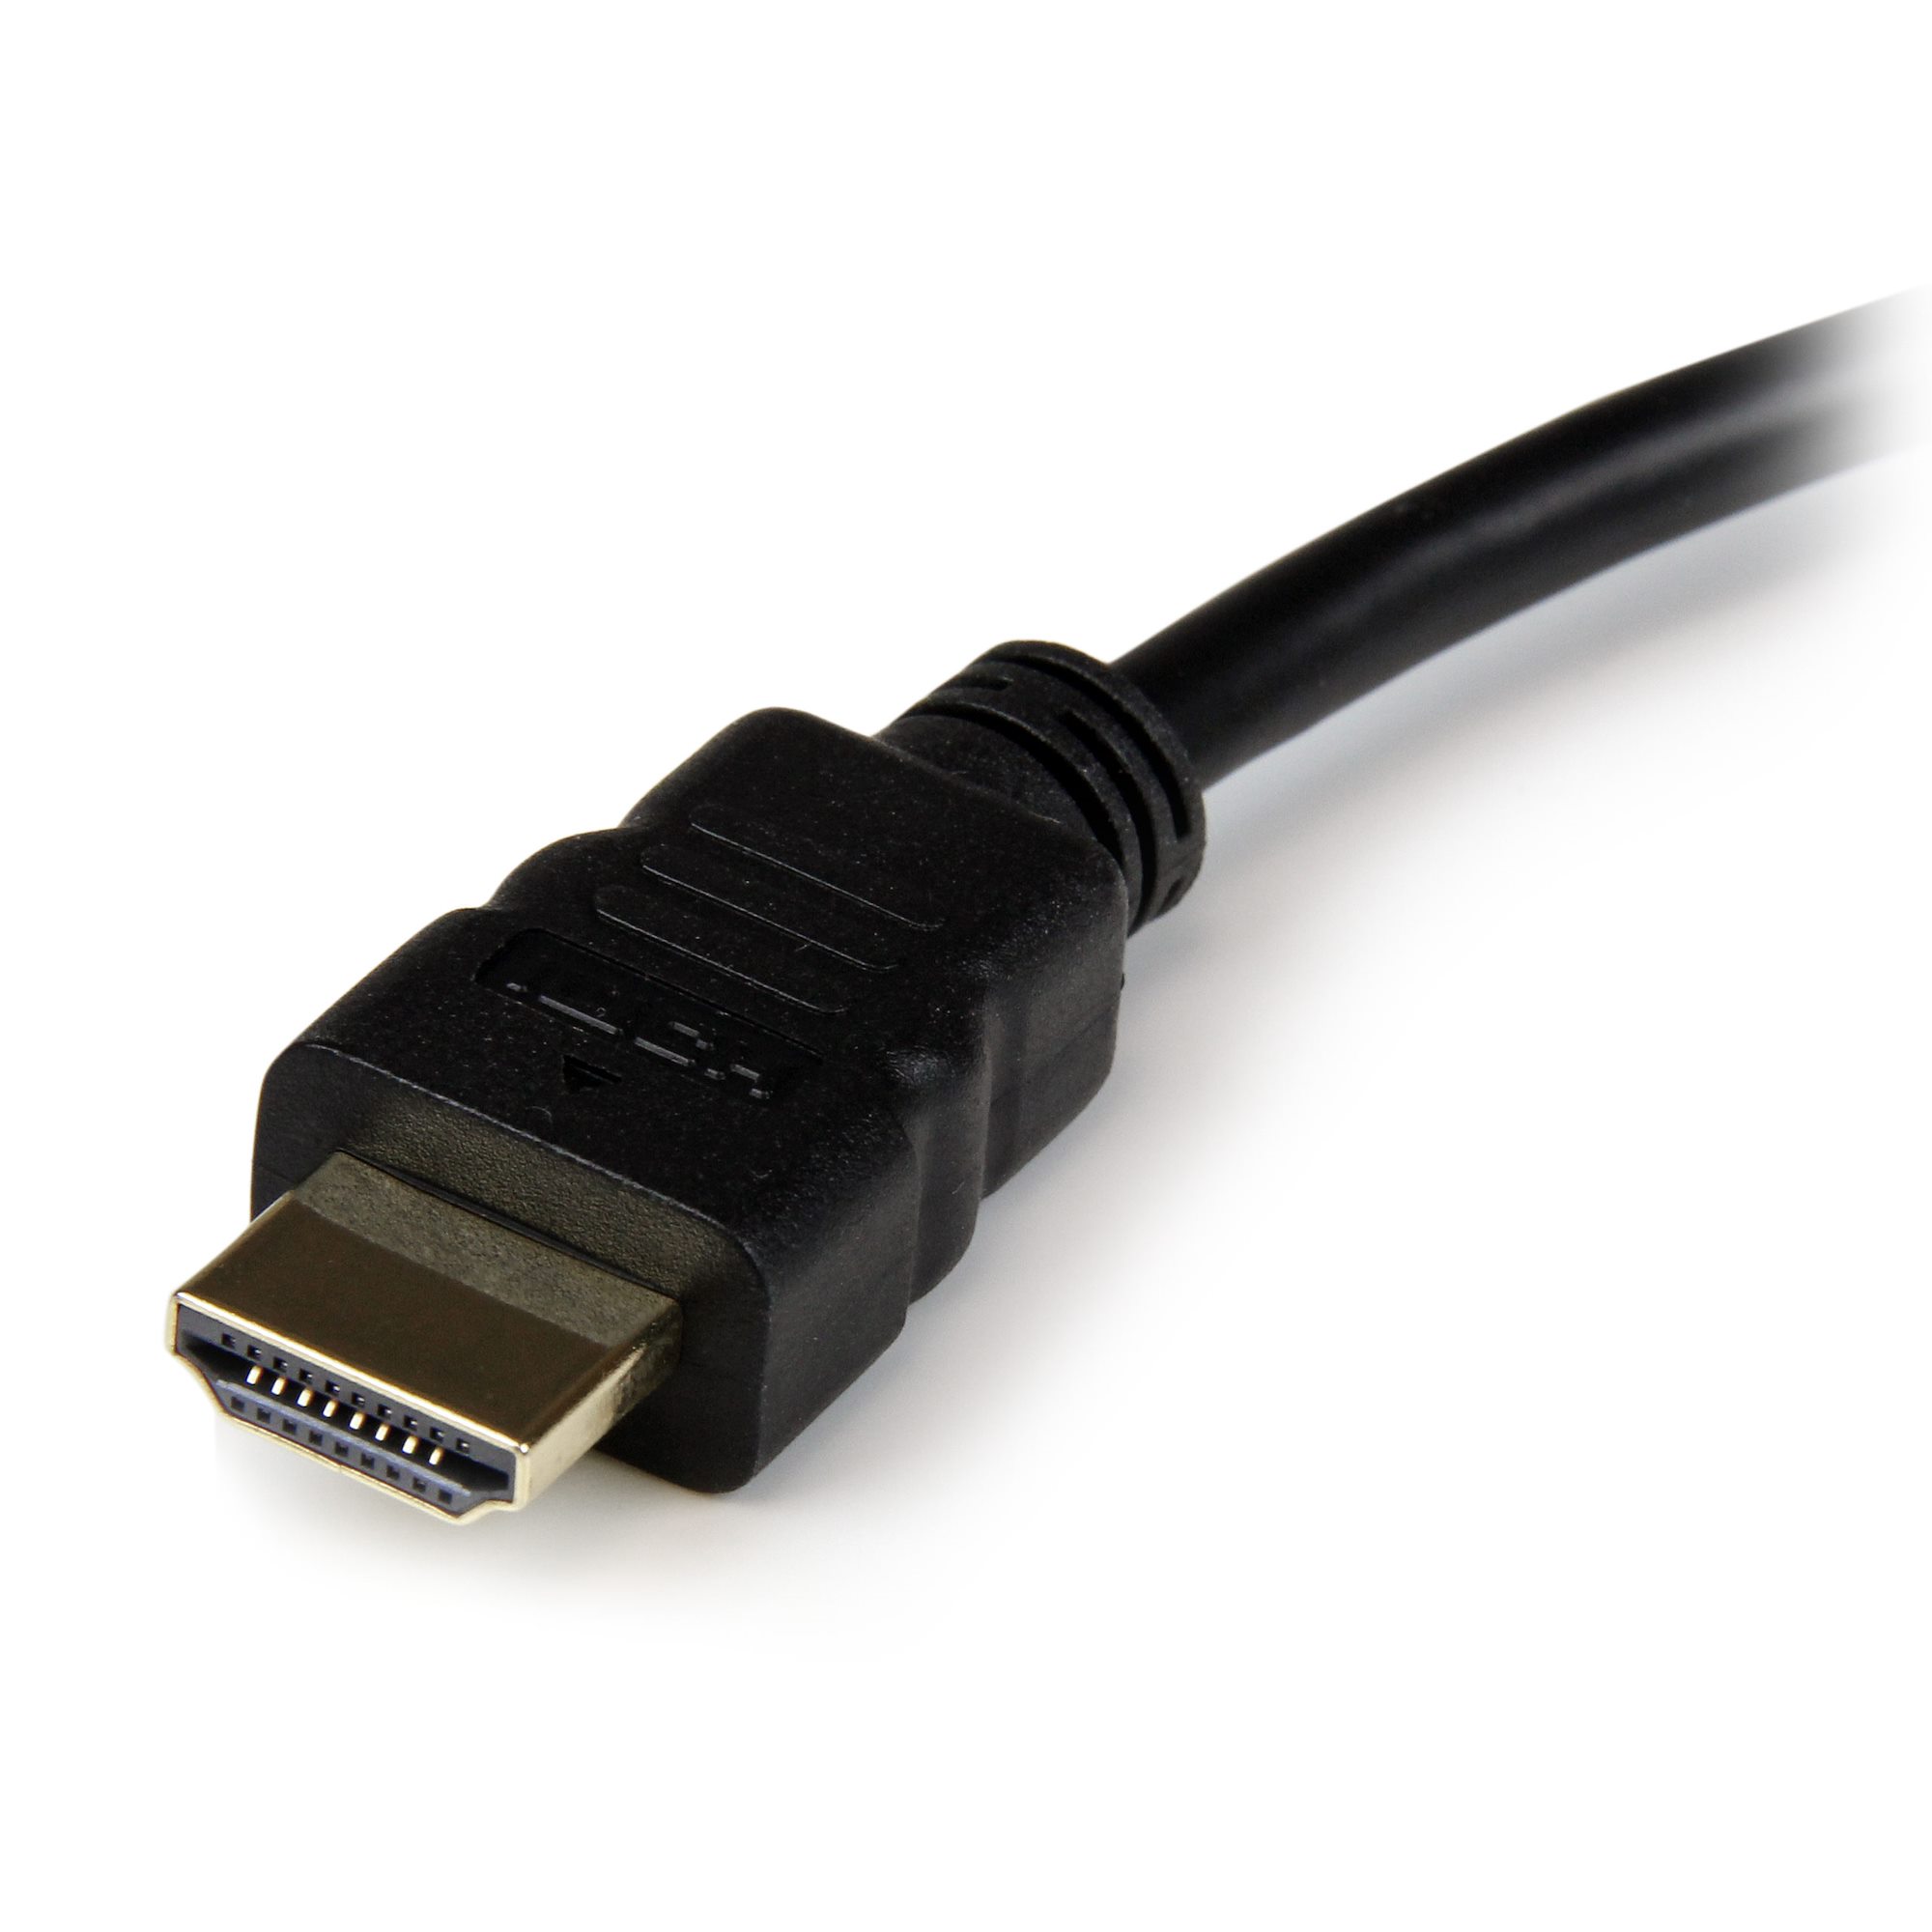 StarTech. com Cable convertidor VGA a HDMI de 6 pies con soporte de audio  USB y alimentación - Cable adaptador de video analógico a digital para